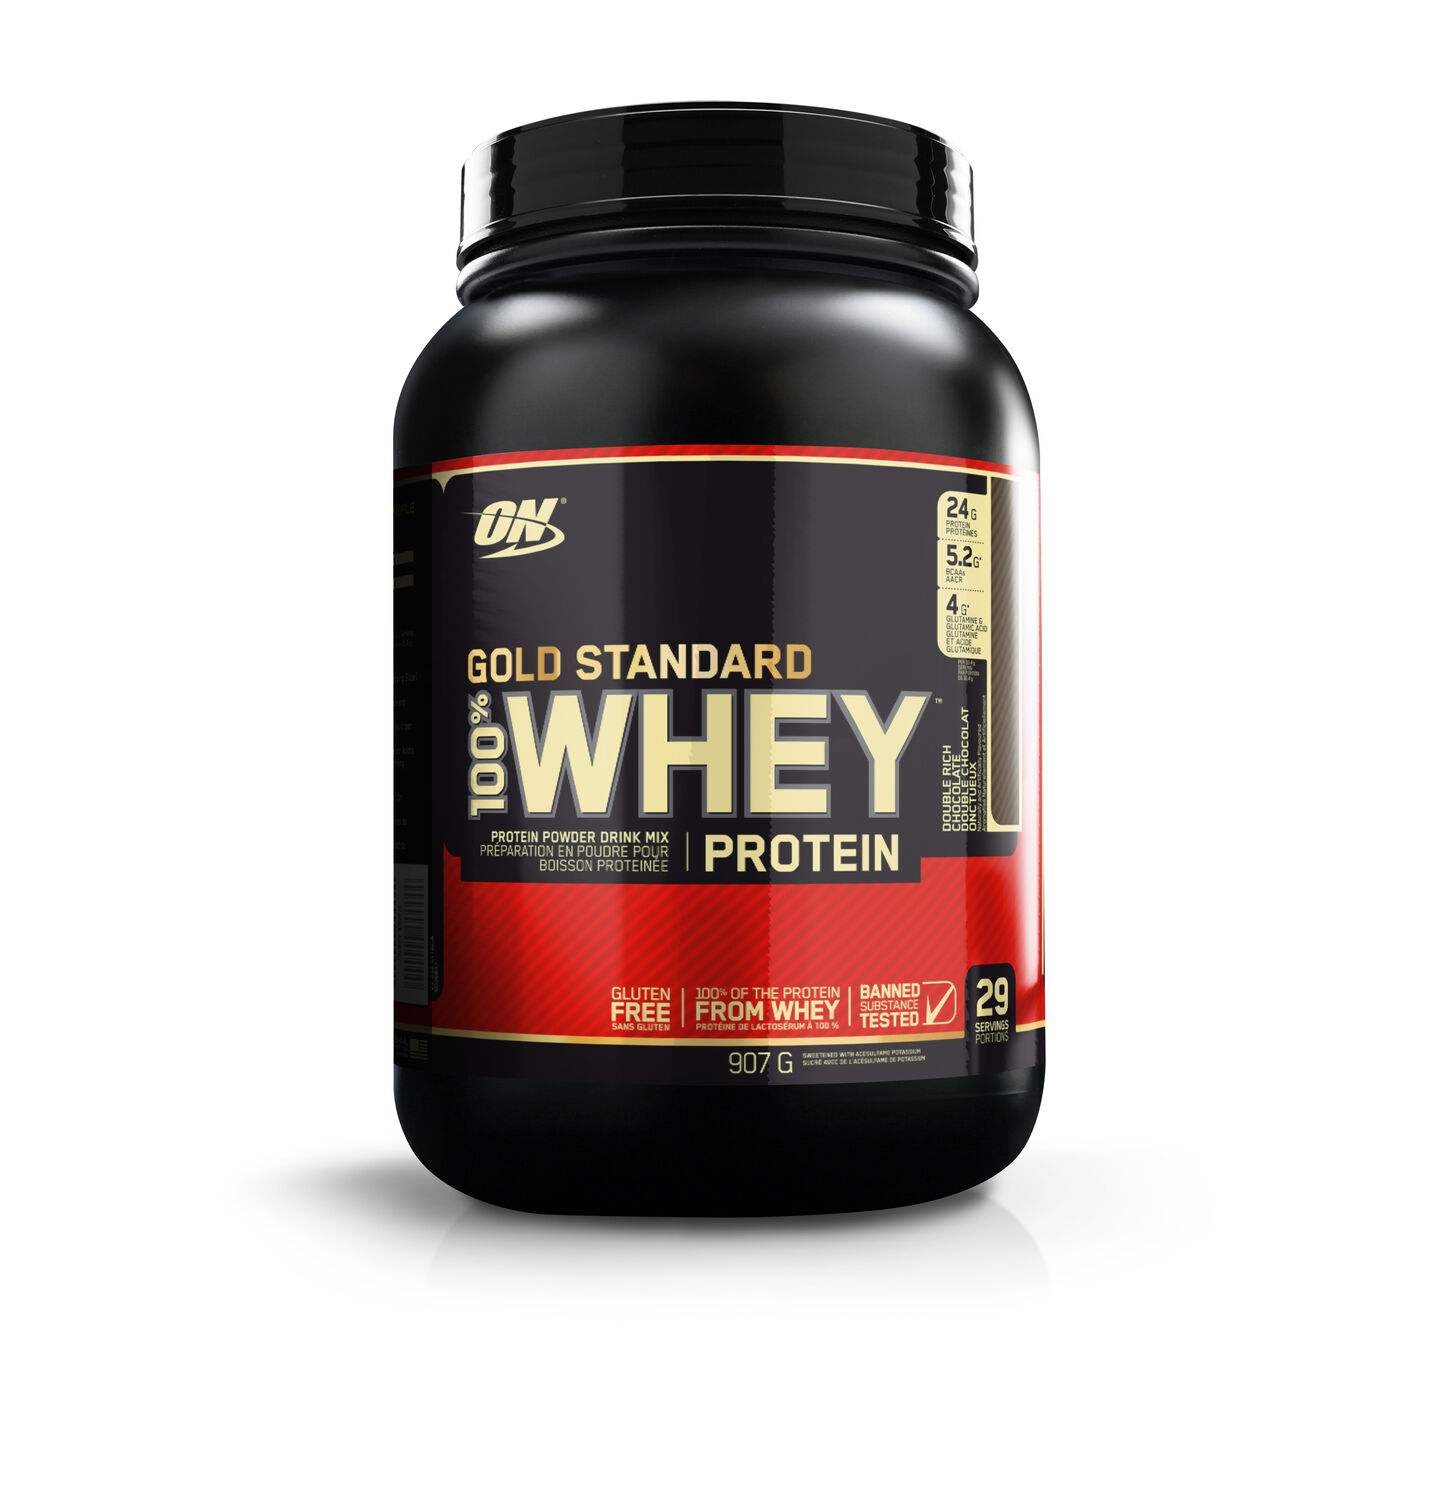 Whey protein supplements